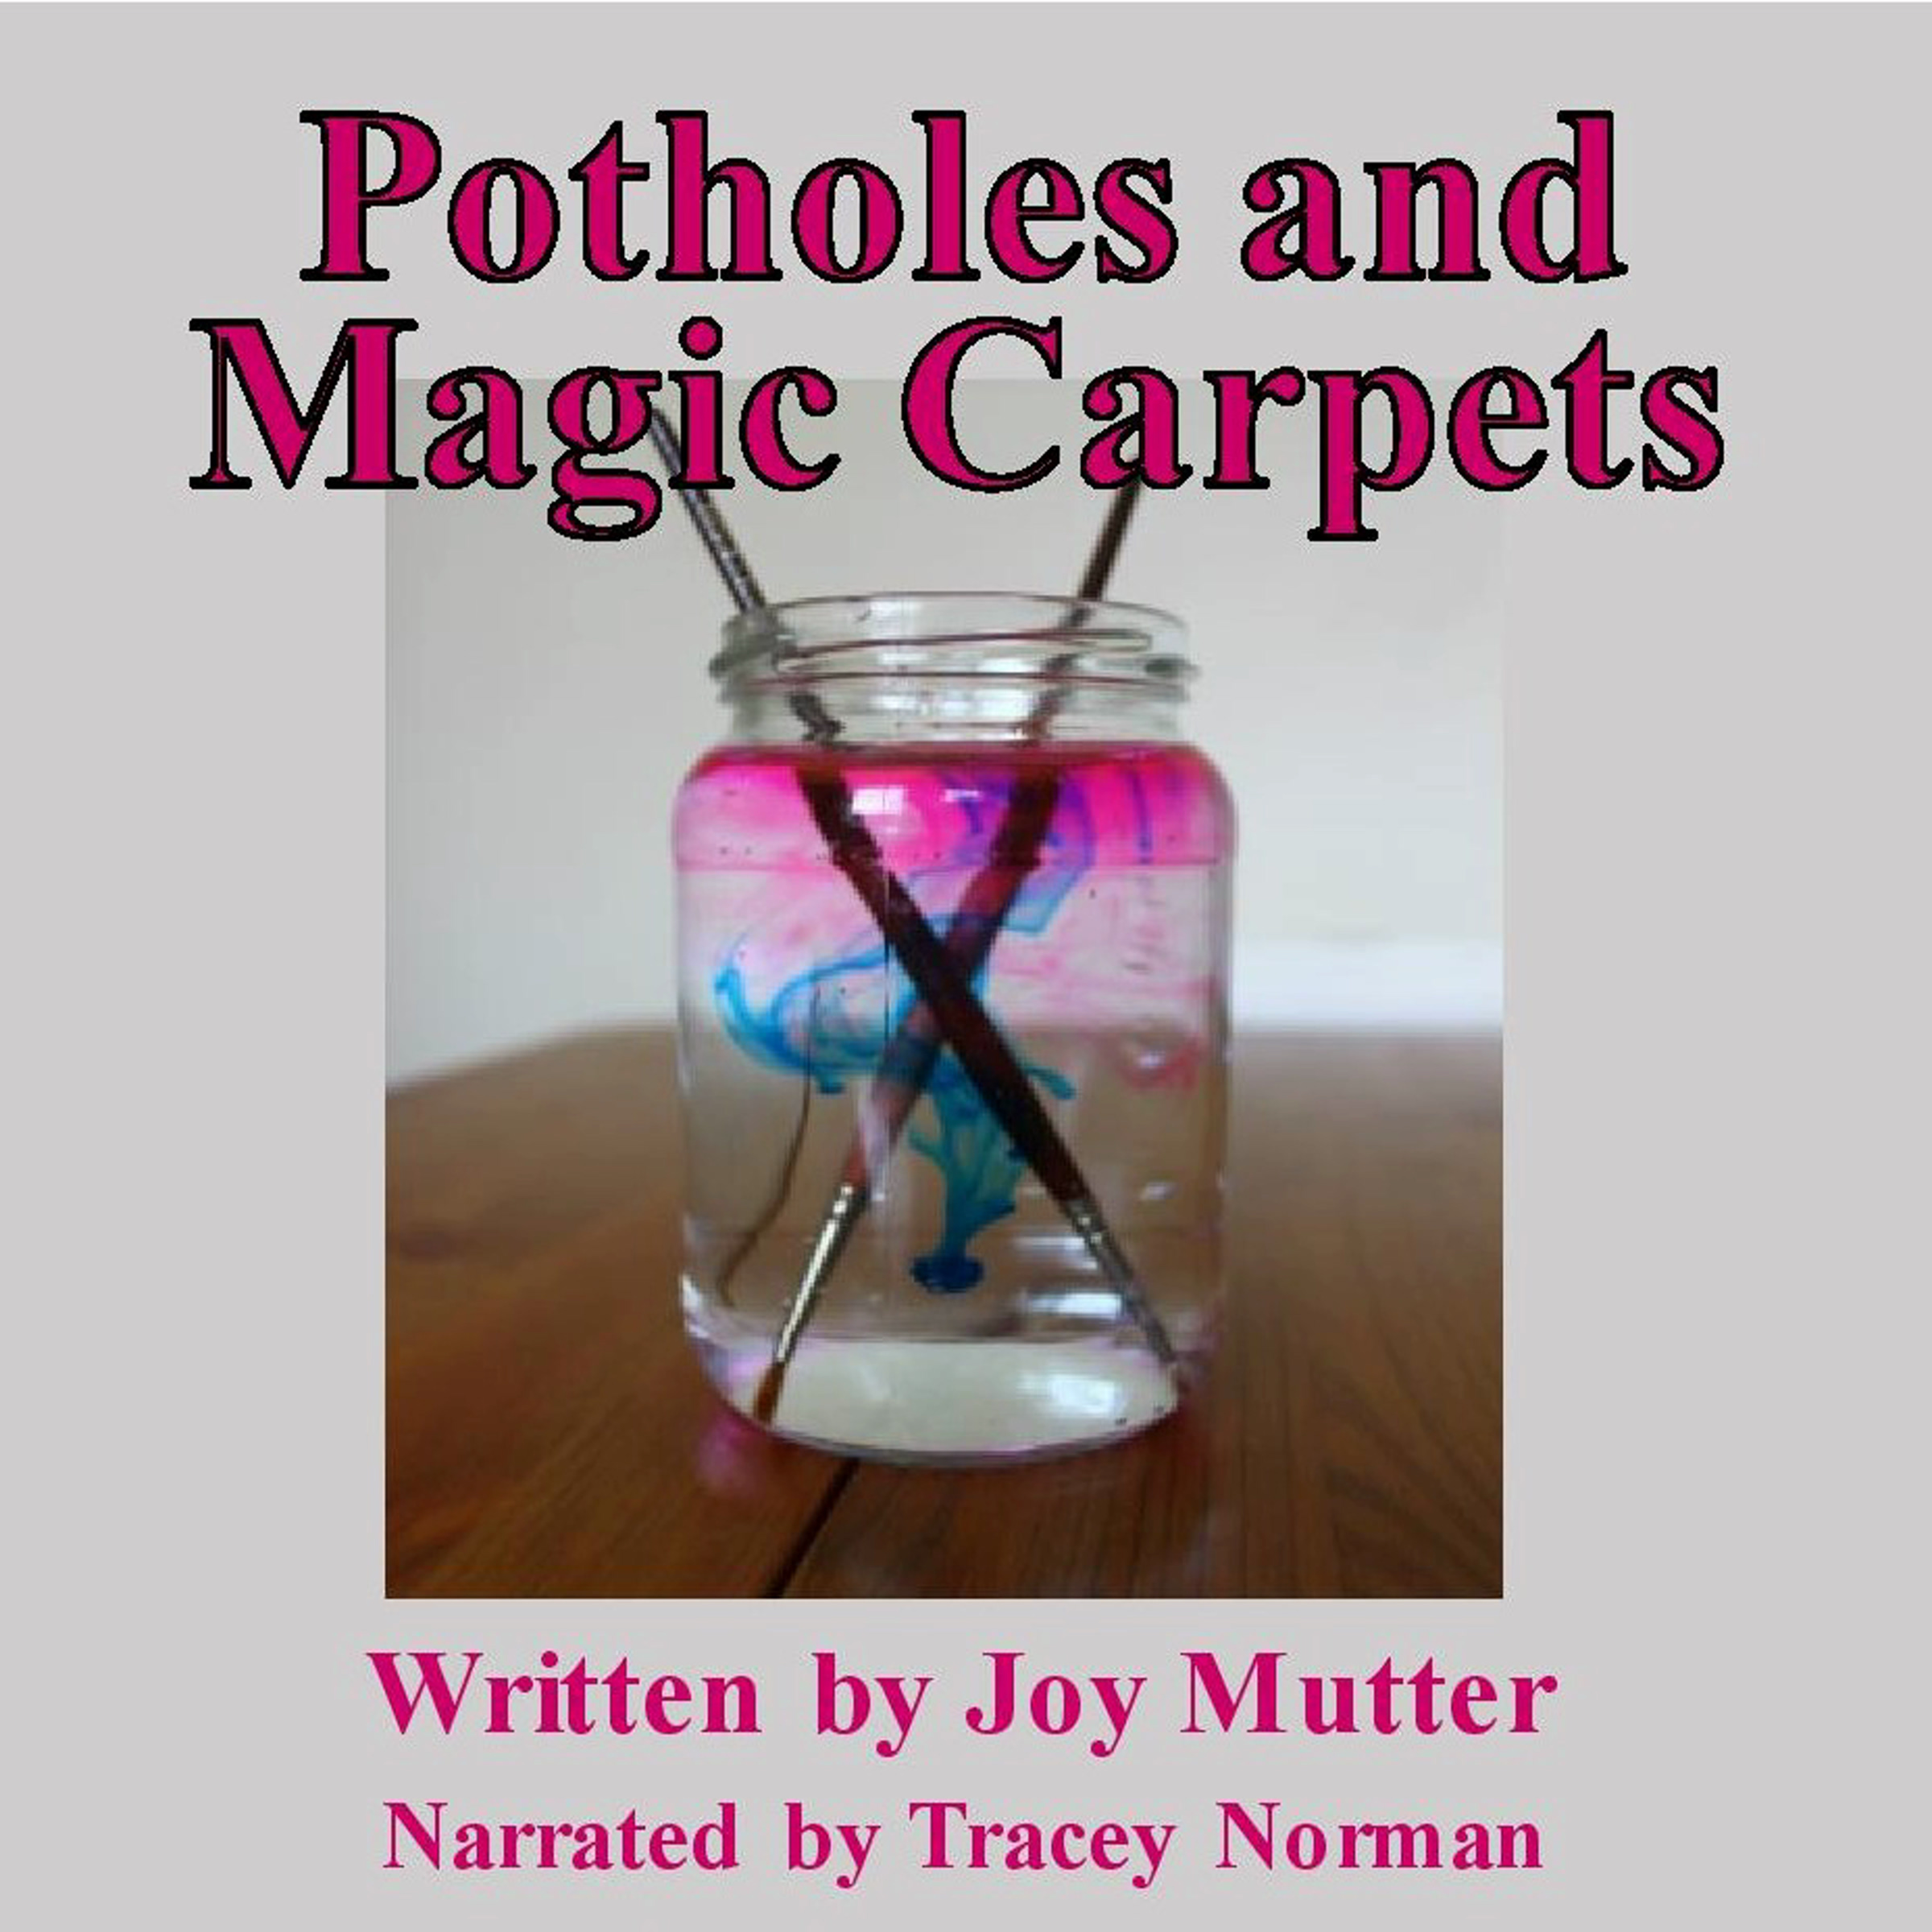 Potholes and Magic Carpets audiobook cover JPG 2400